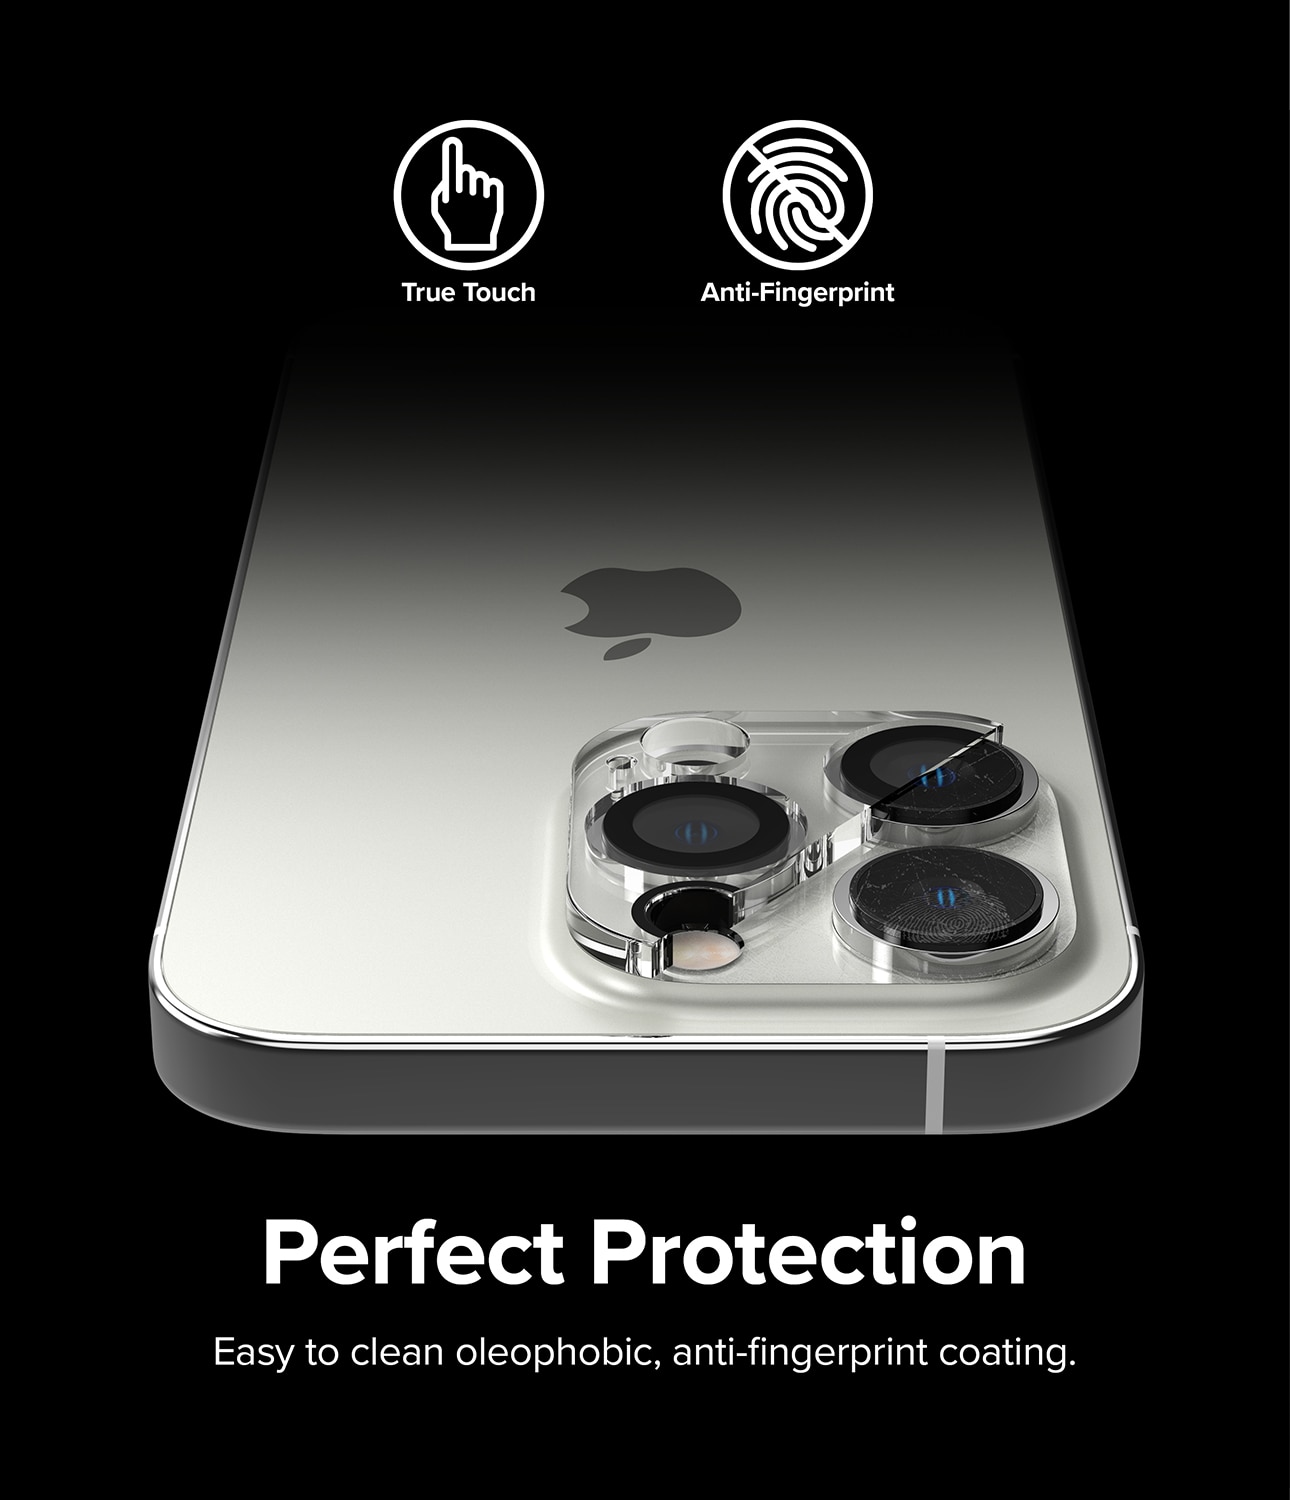 Camera Protector Glass (2 Stück) iPhone 14 Pro Max